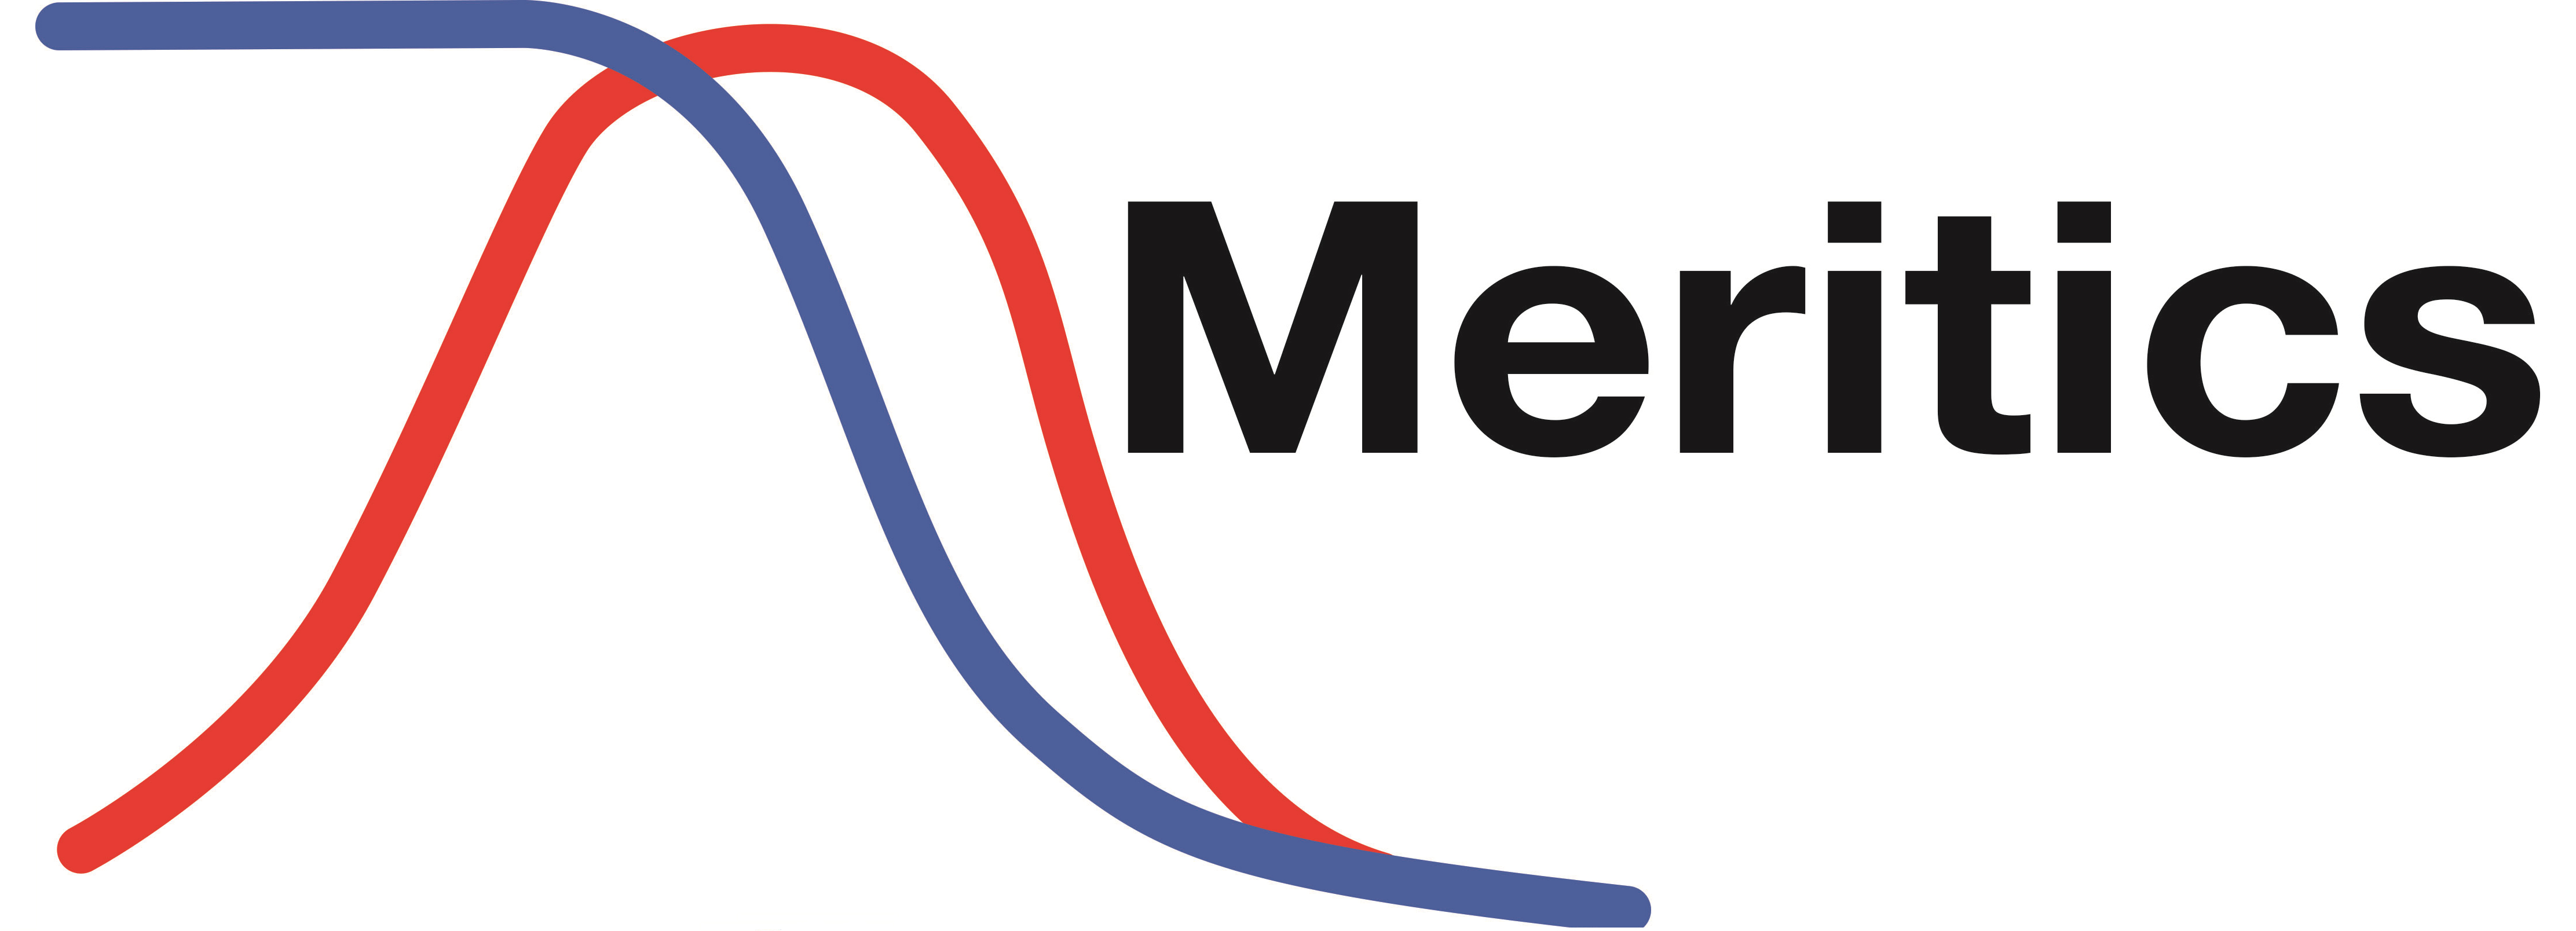 Meritics logo cropped